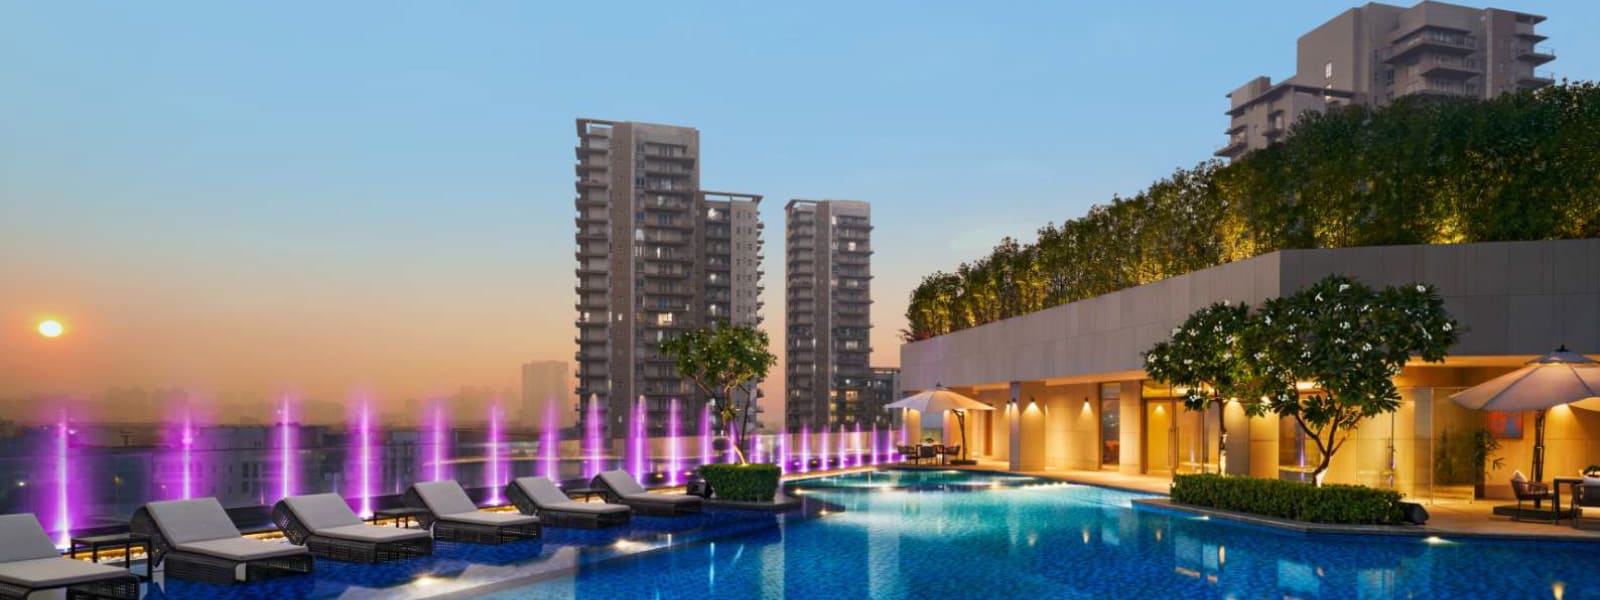 Puri Diplomatic Residences Luxury Apartments Sector 111 Gur - Haryana - Gurgaon ID1542205